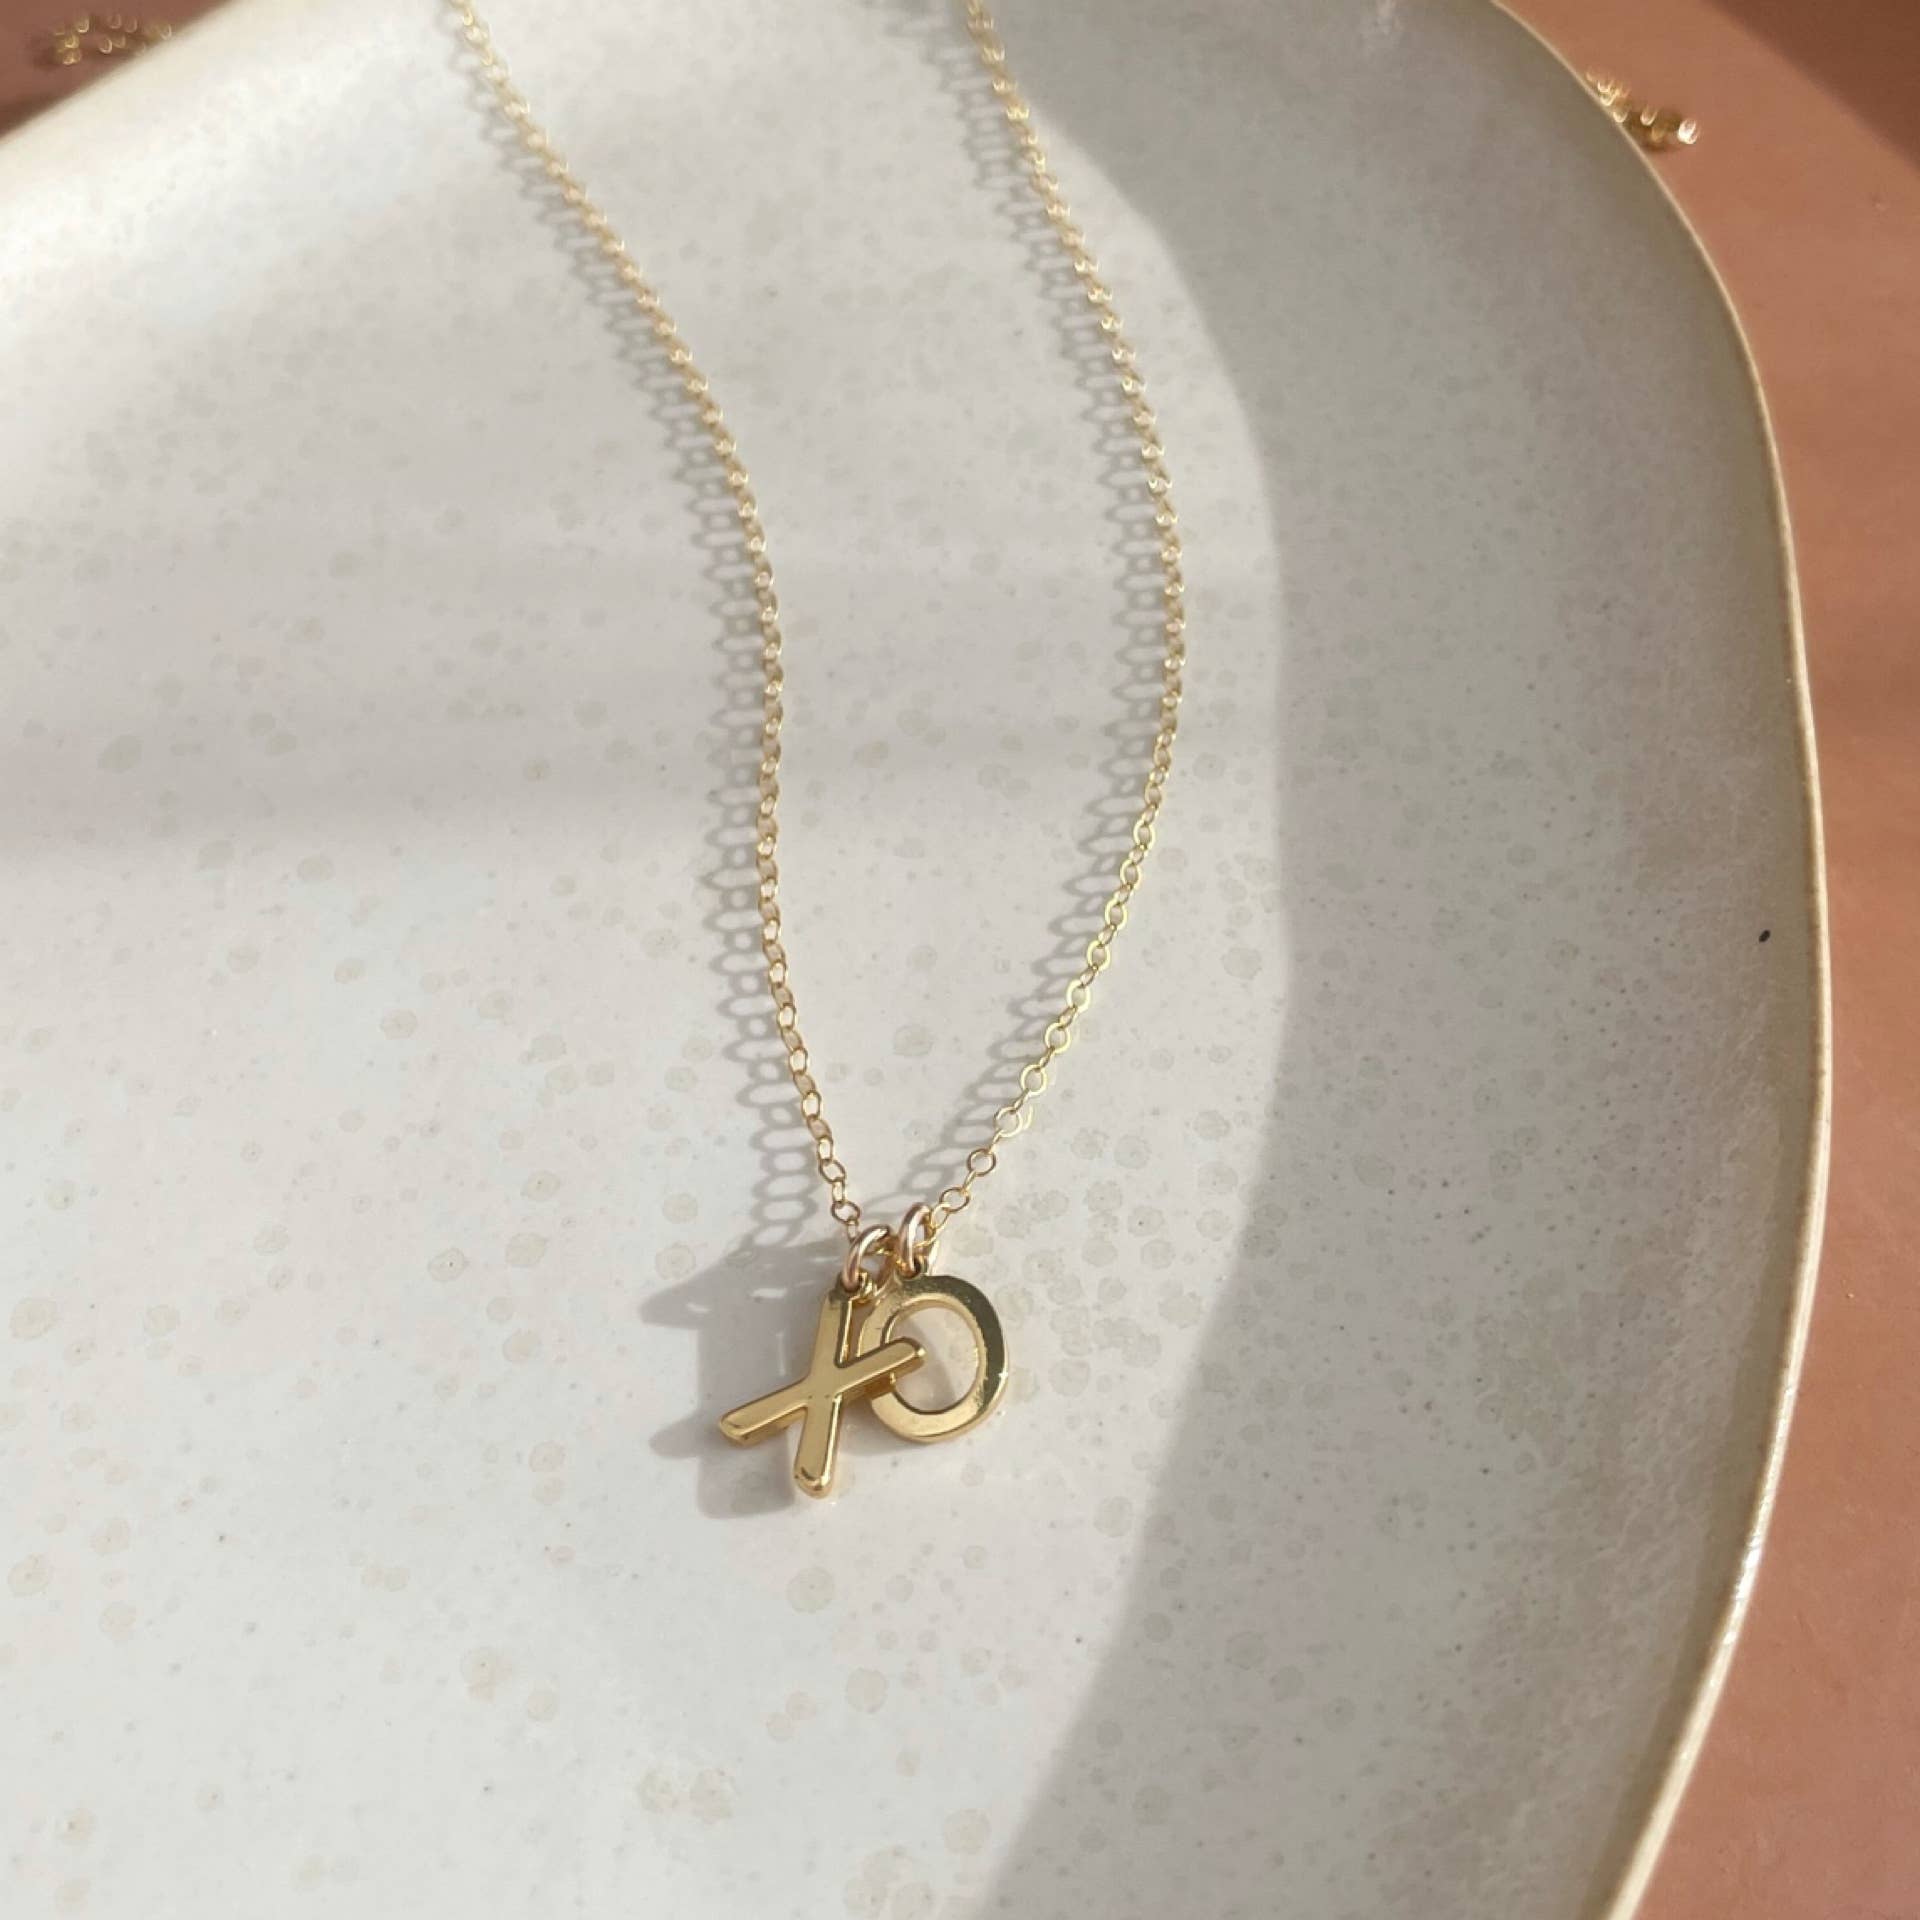 Buy XO Necklace Valentine's Jewelry Valentine's Gift Online in India - Etsy